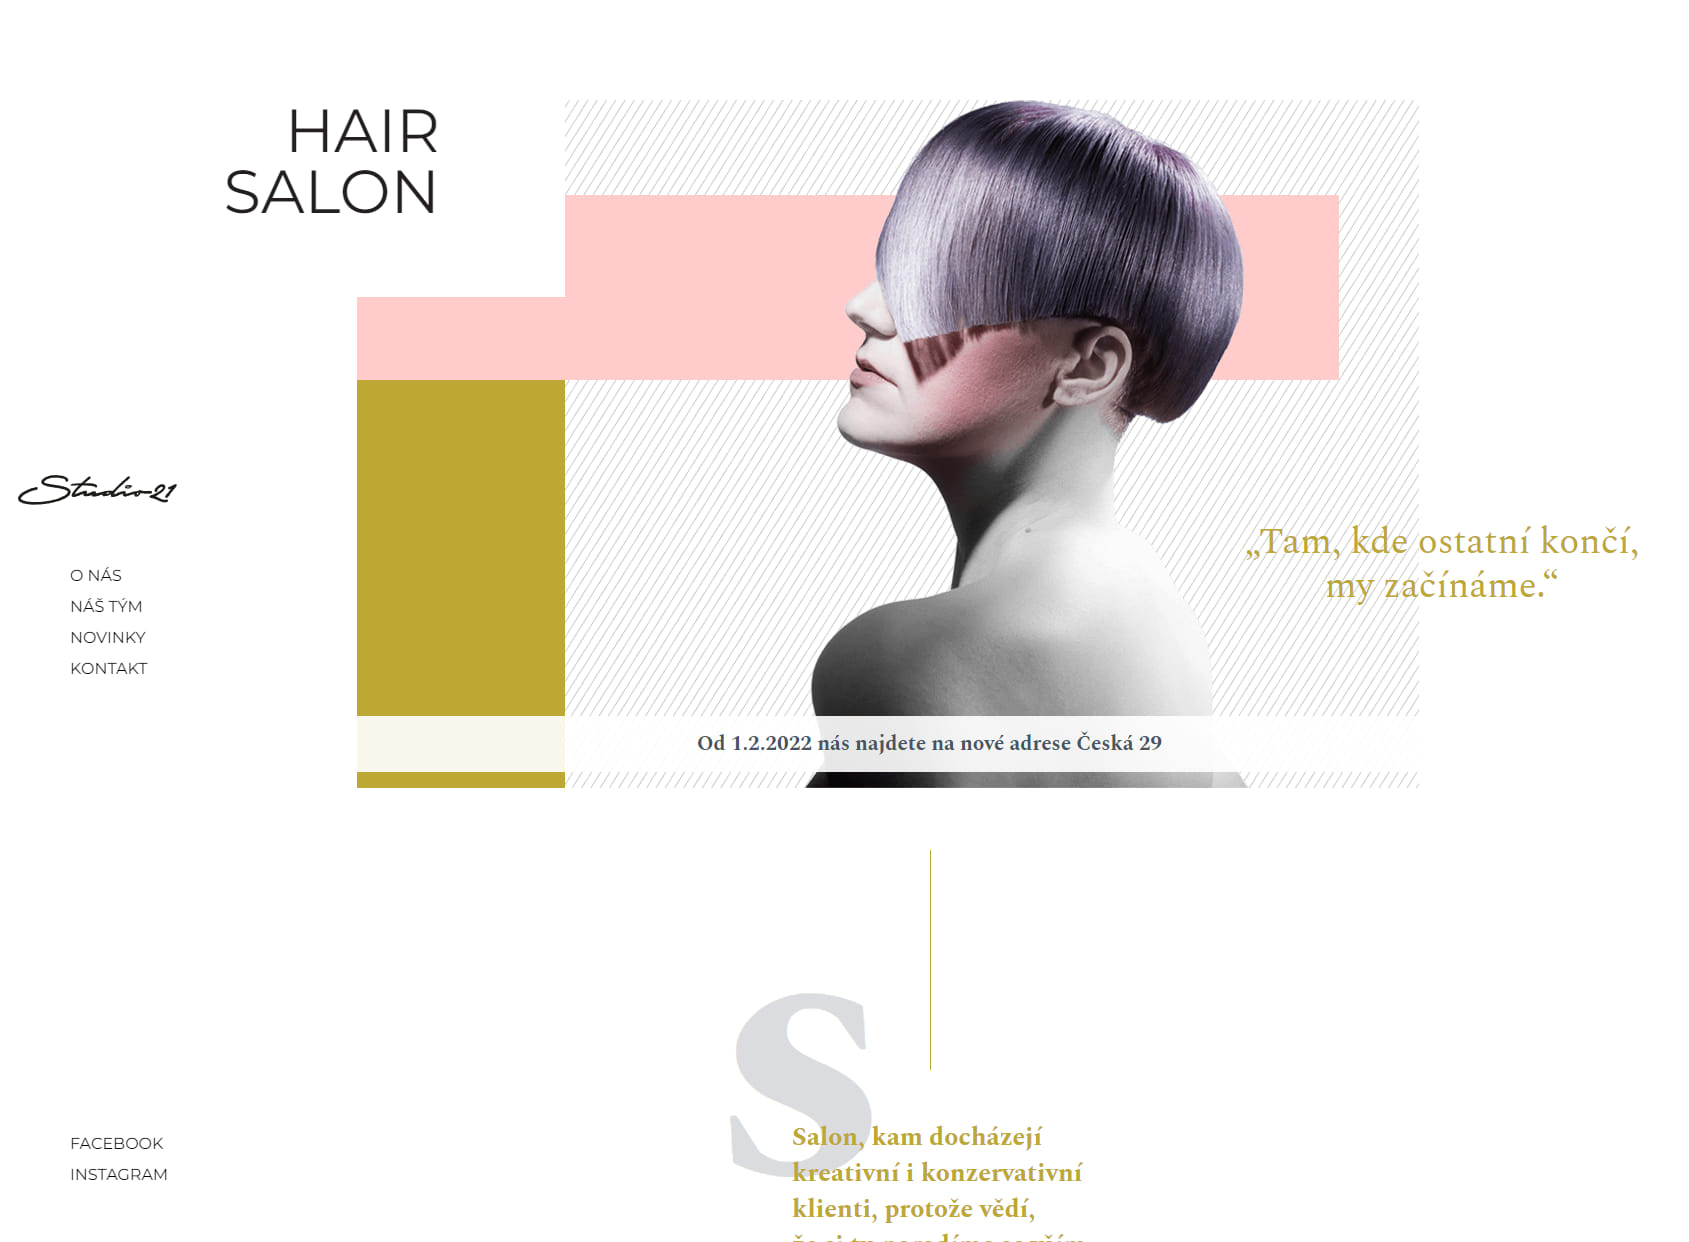 Hairdresser's Salon - Studio 21